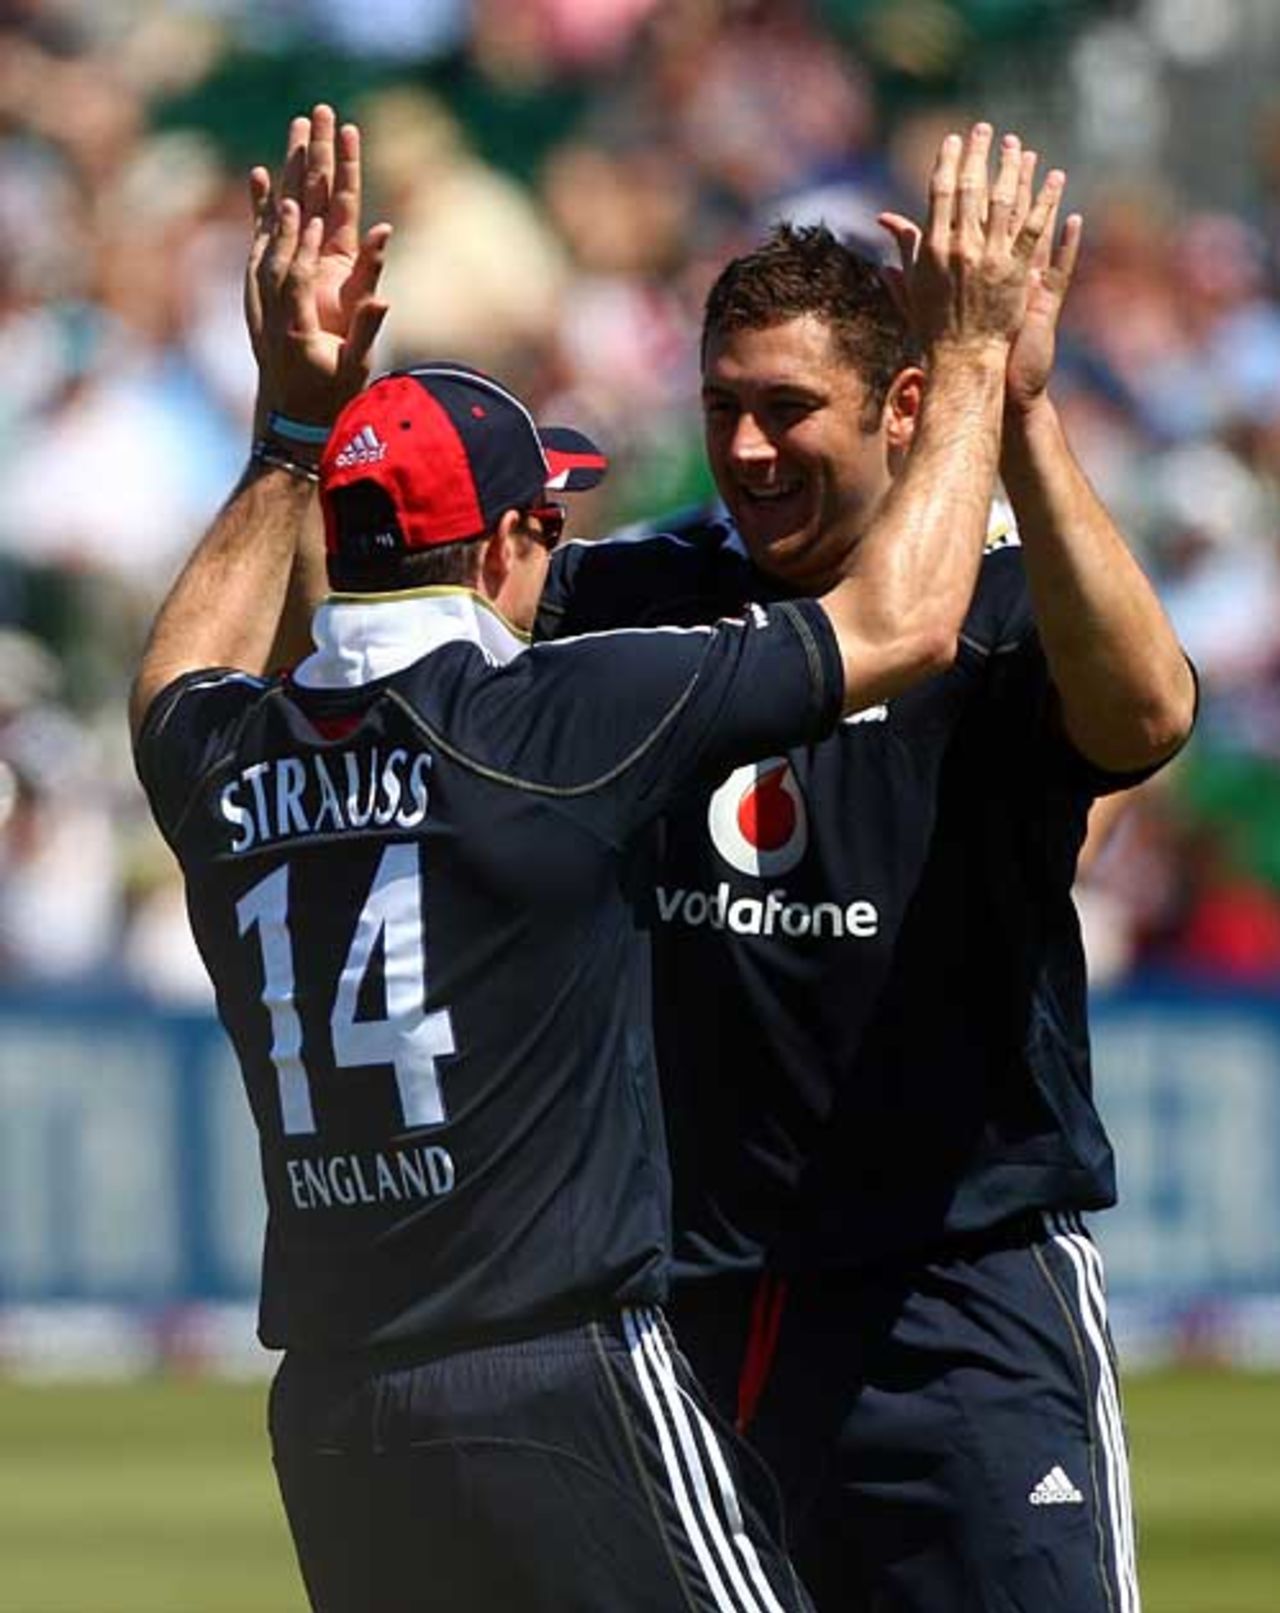 Tim Bresnan and Andrew Strauss celebrate removing Shivnarine Chanderpaul, England v West Indies, 2nd ODI, Bristol, May 24, 2009